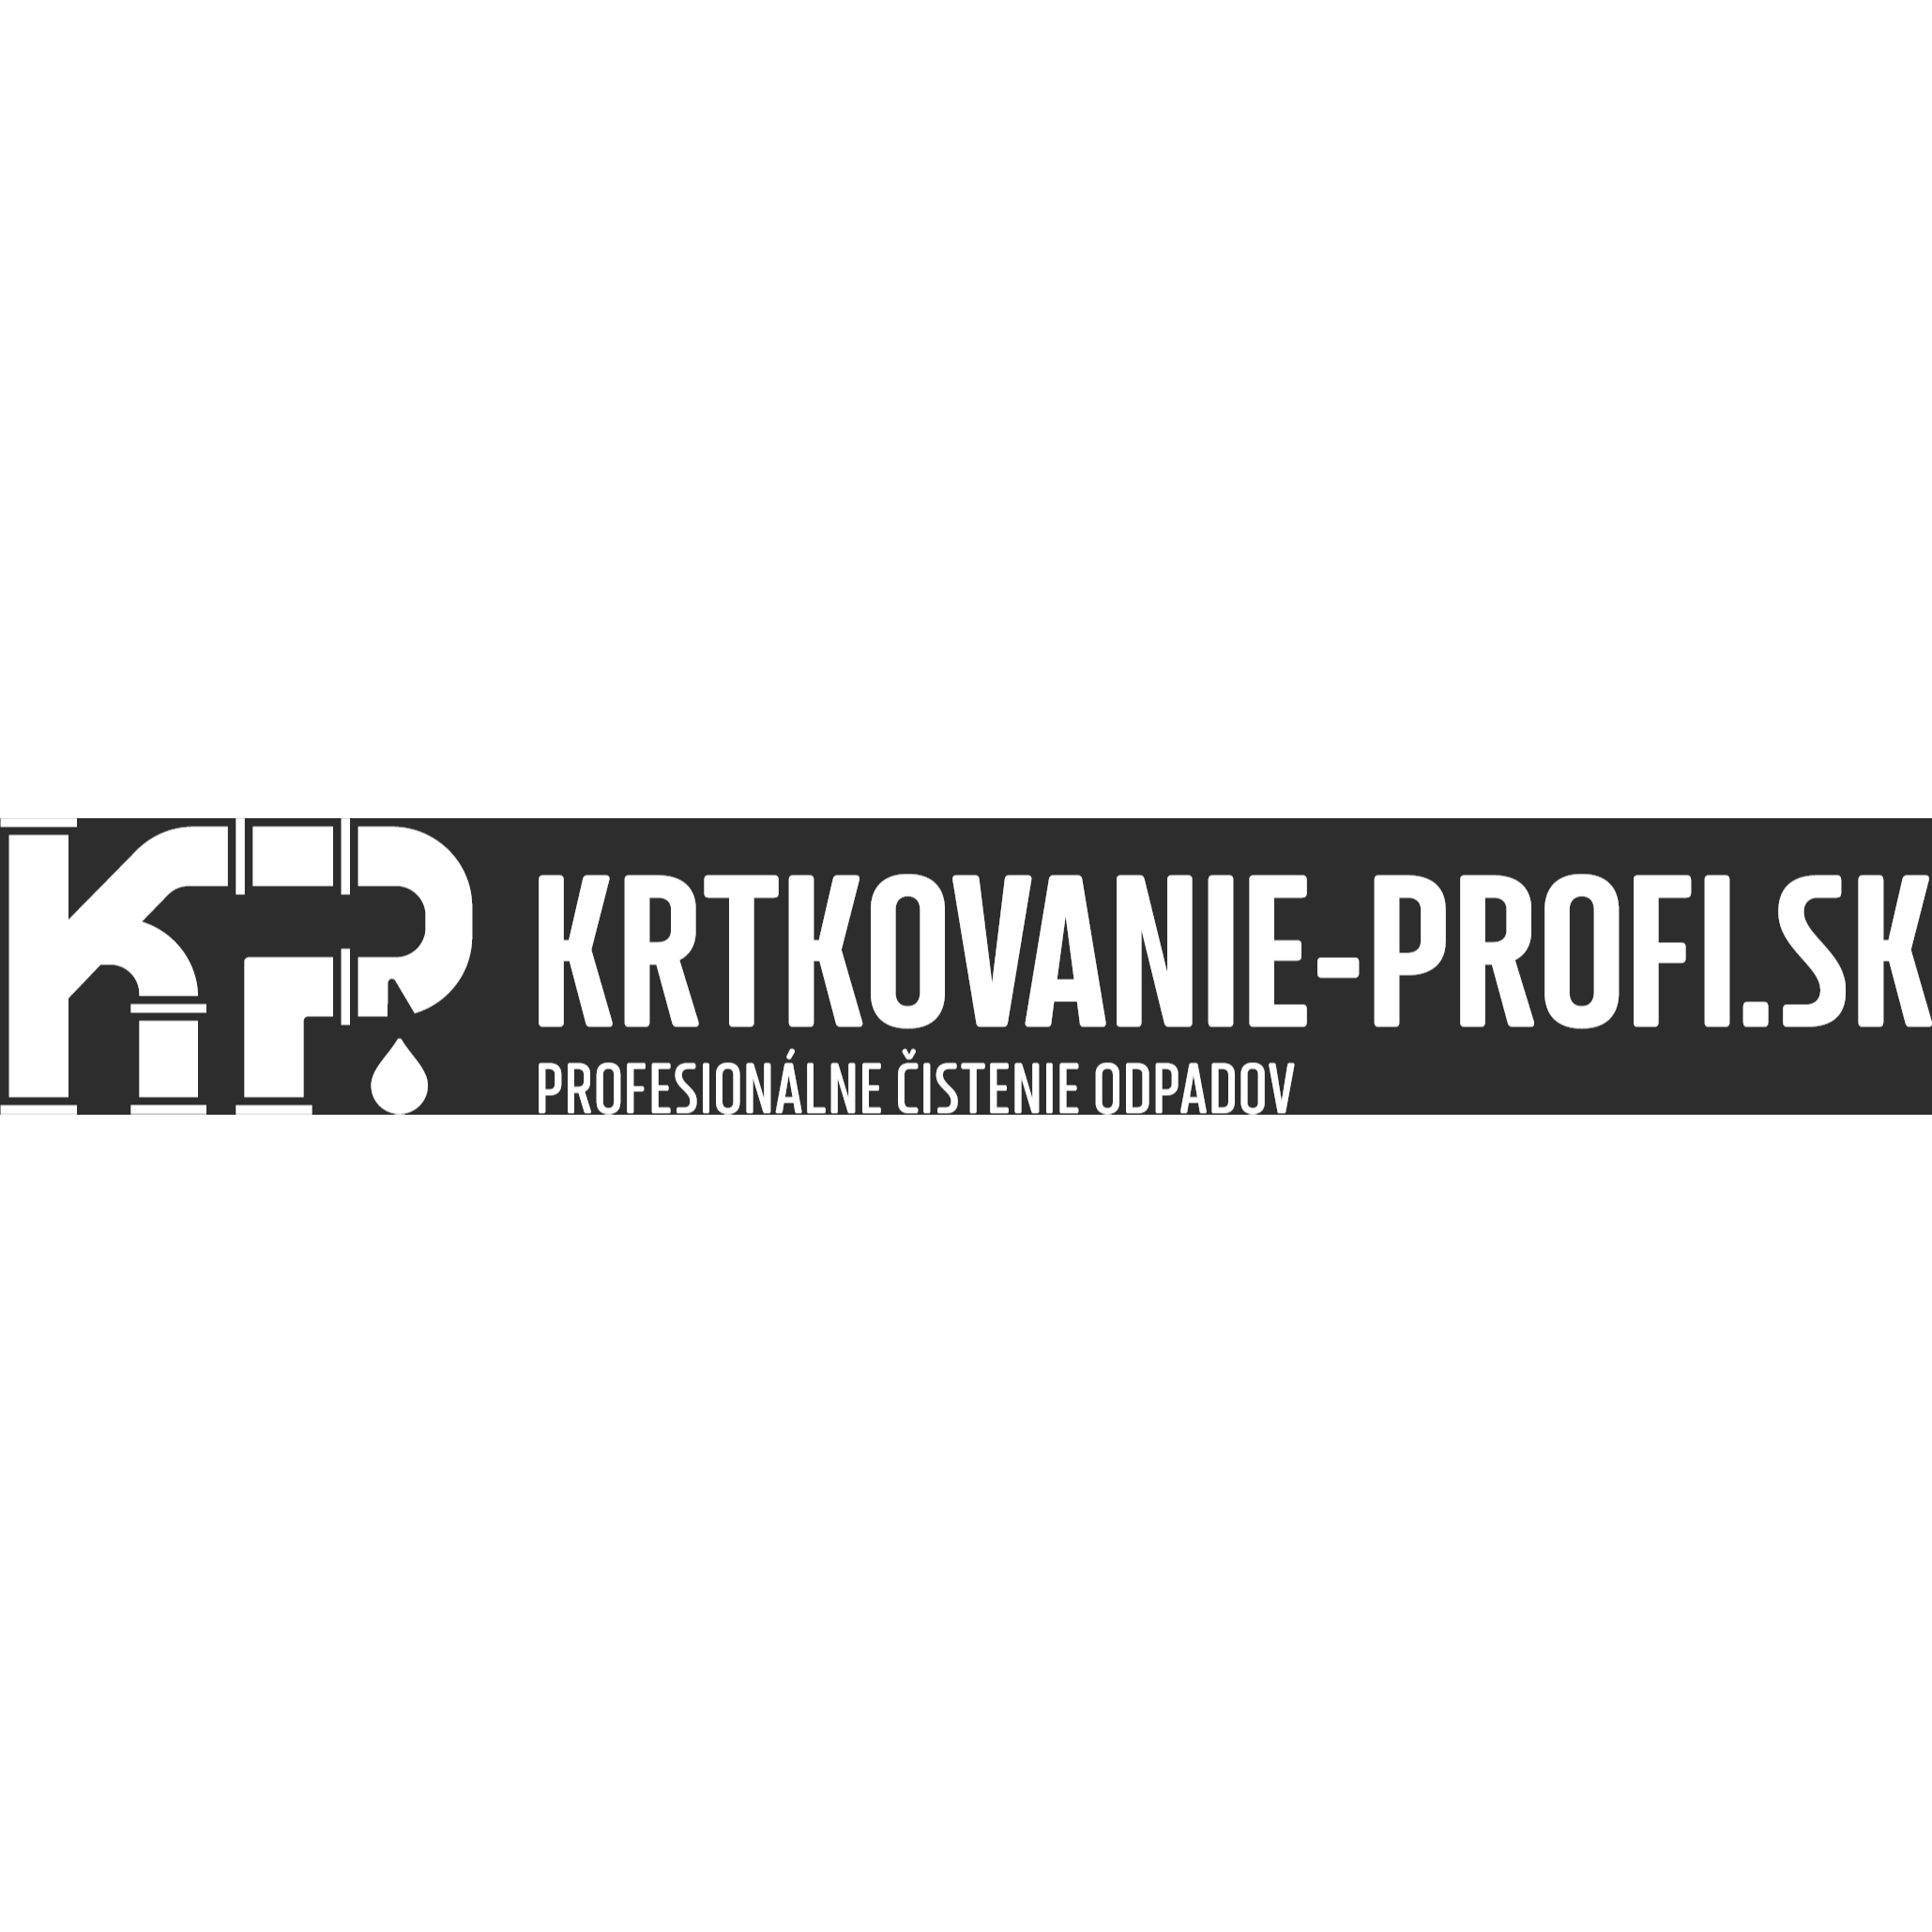 KP KRTKOVANIE- PROFI.sk